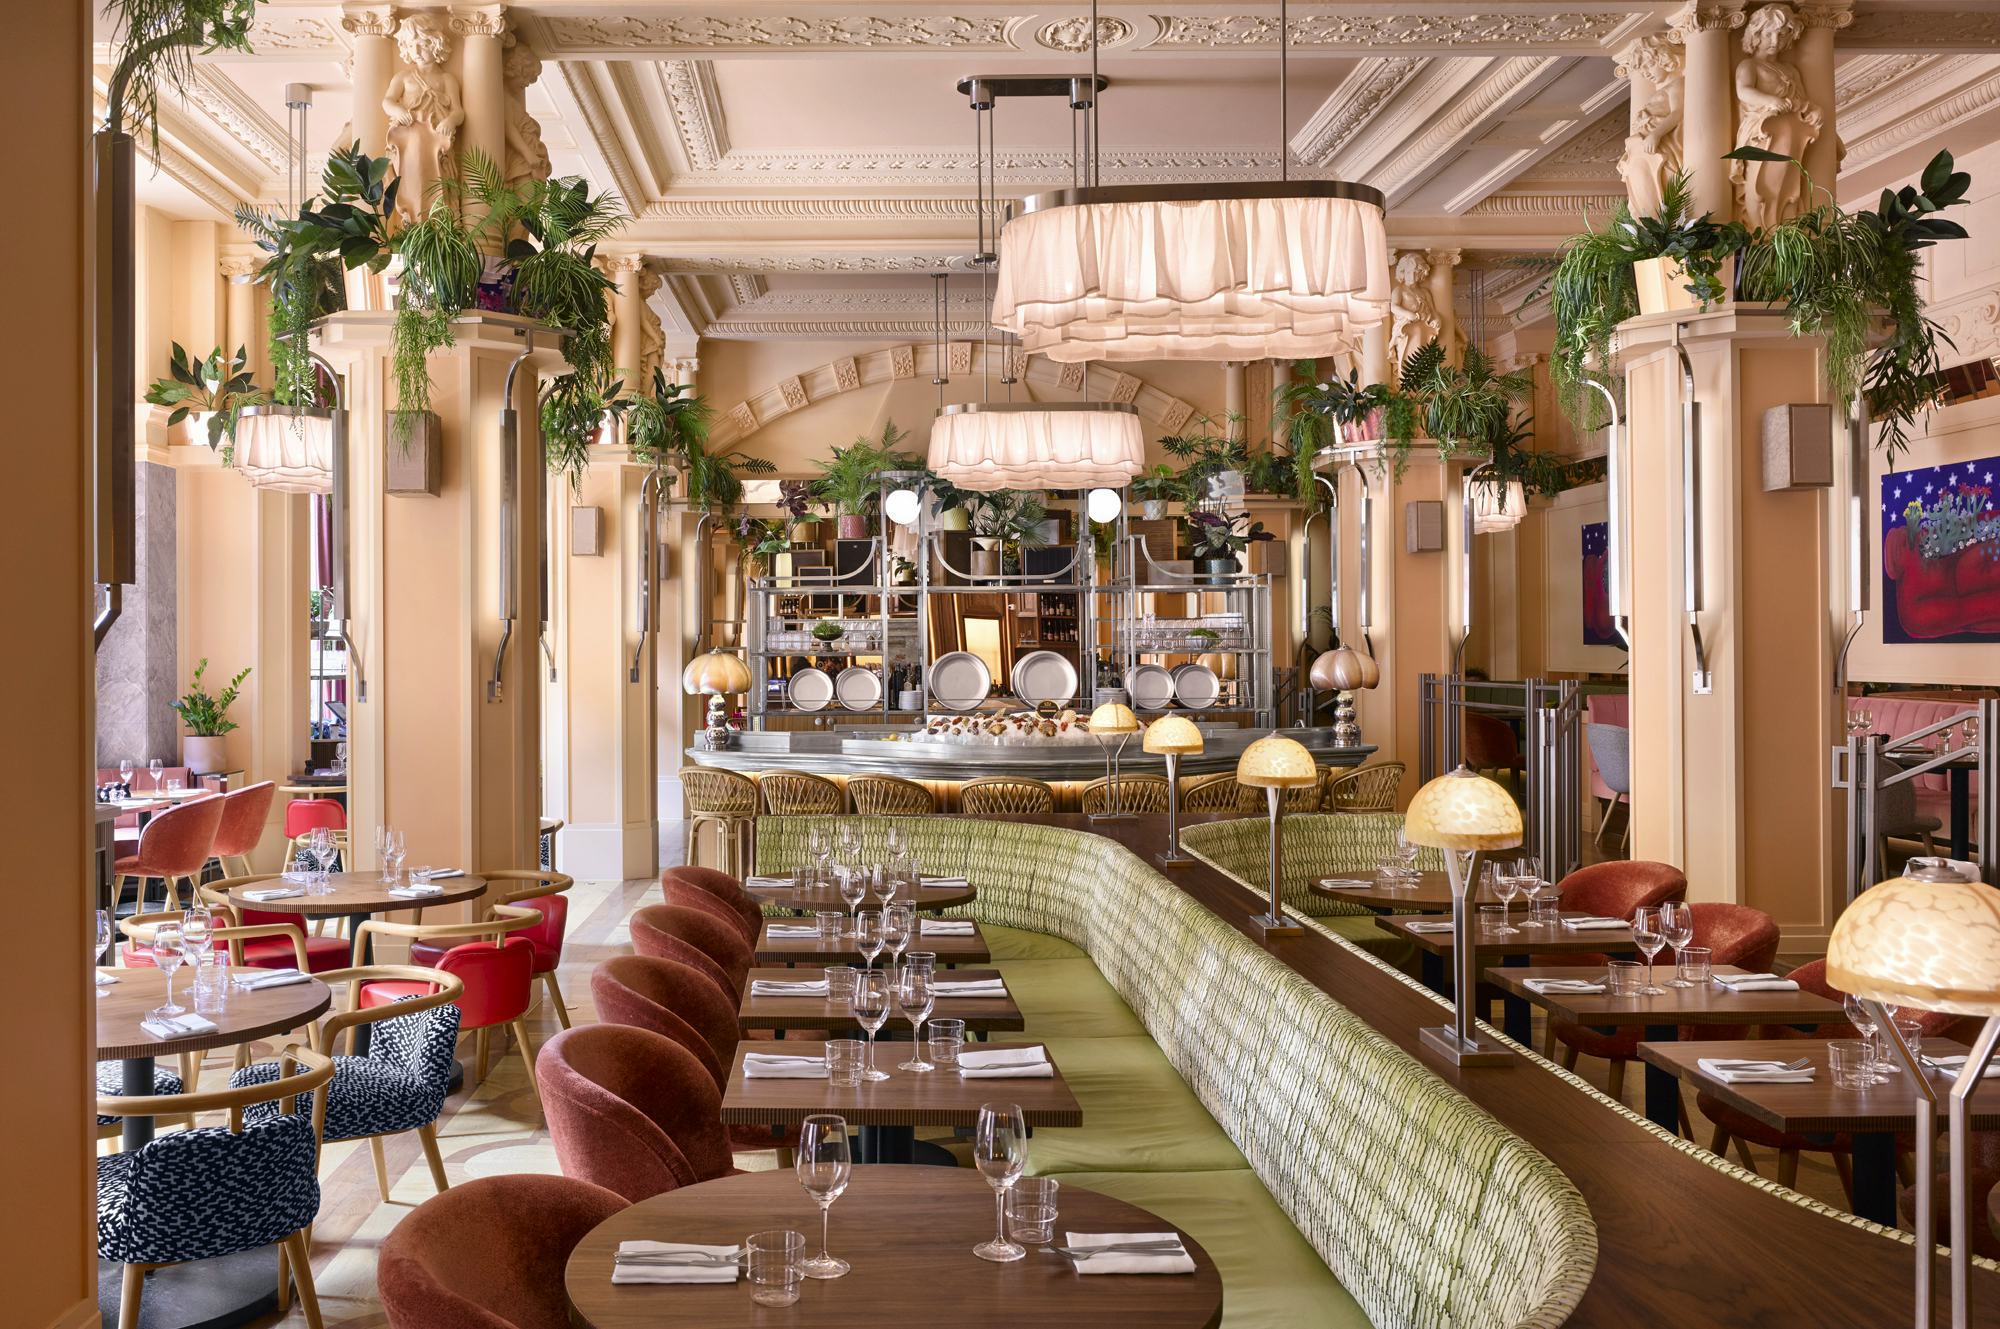 Kimpton Fitzroy London hotels venues luxury designer interiors dining food drink neptune restaurants